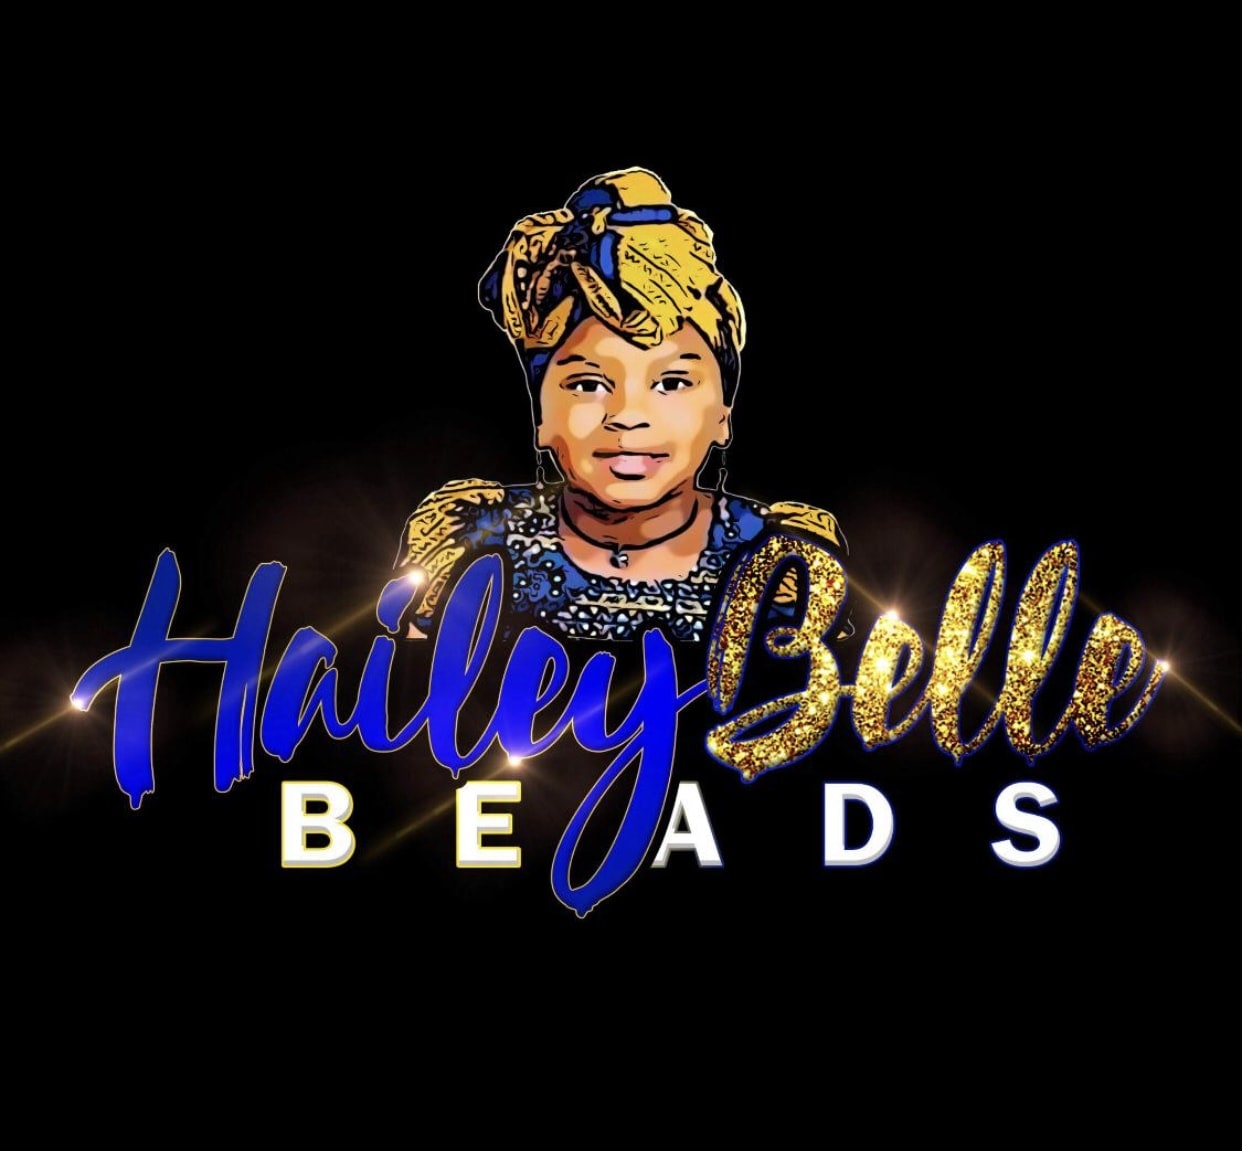 Hailey Belle Beads